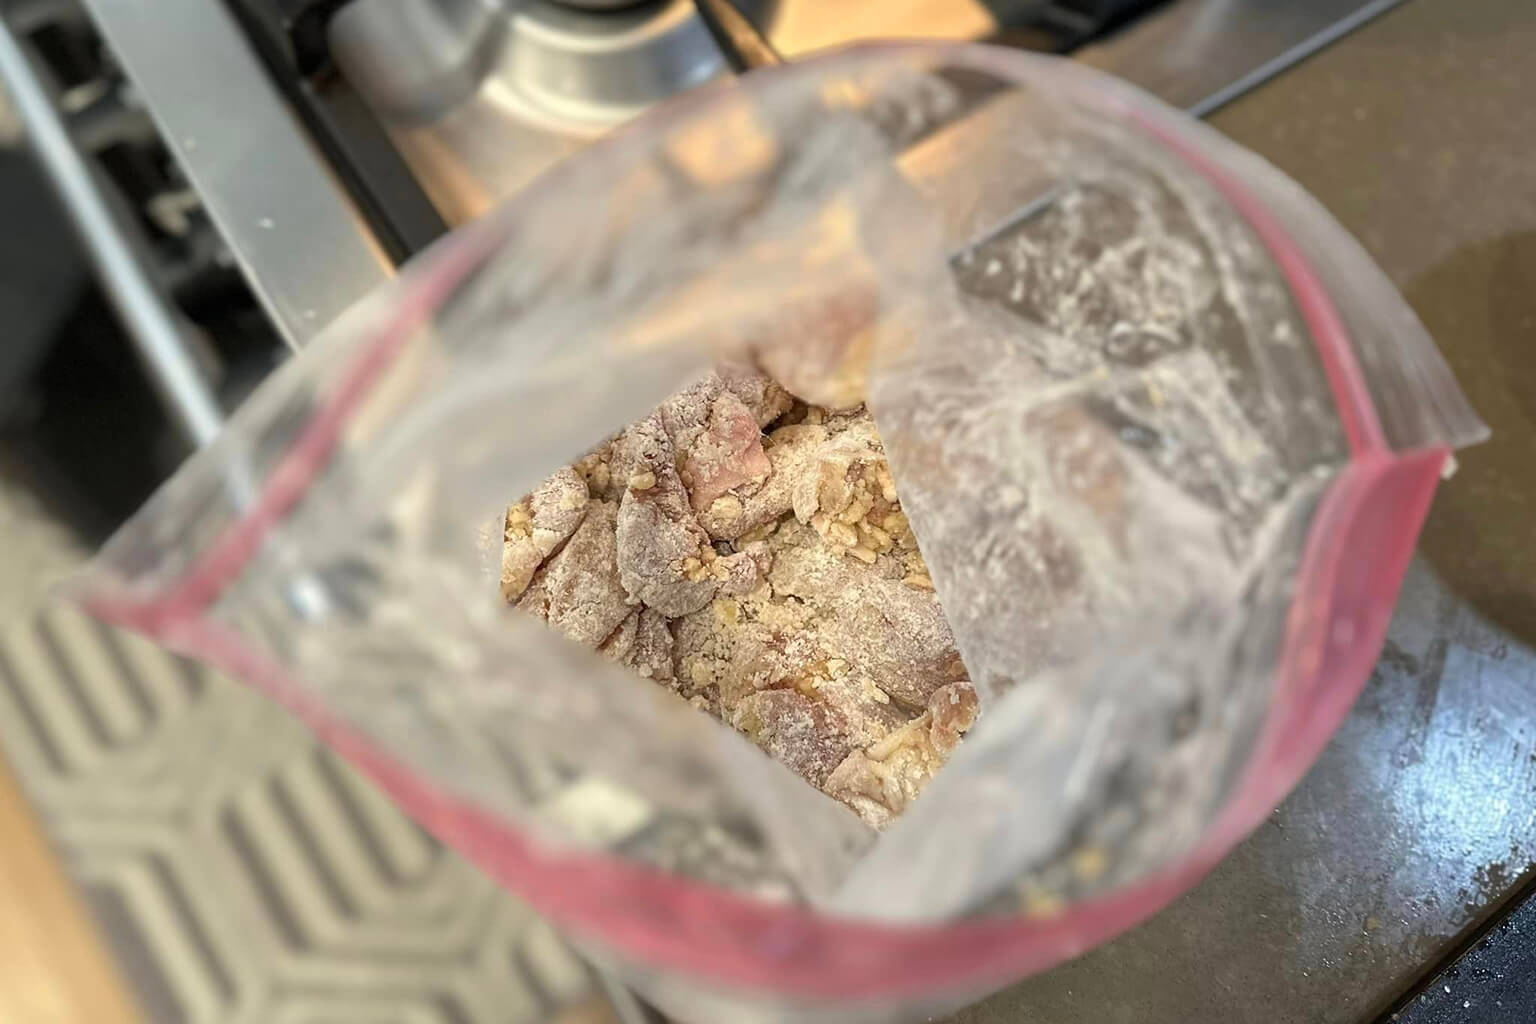 In a new Ziplock bag, add the chicken and katakuriko (potato starch).